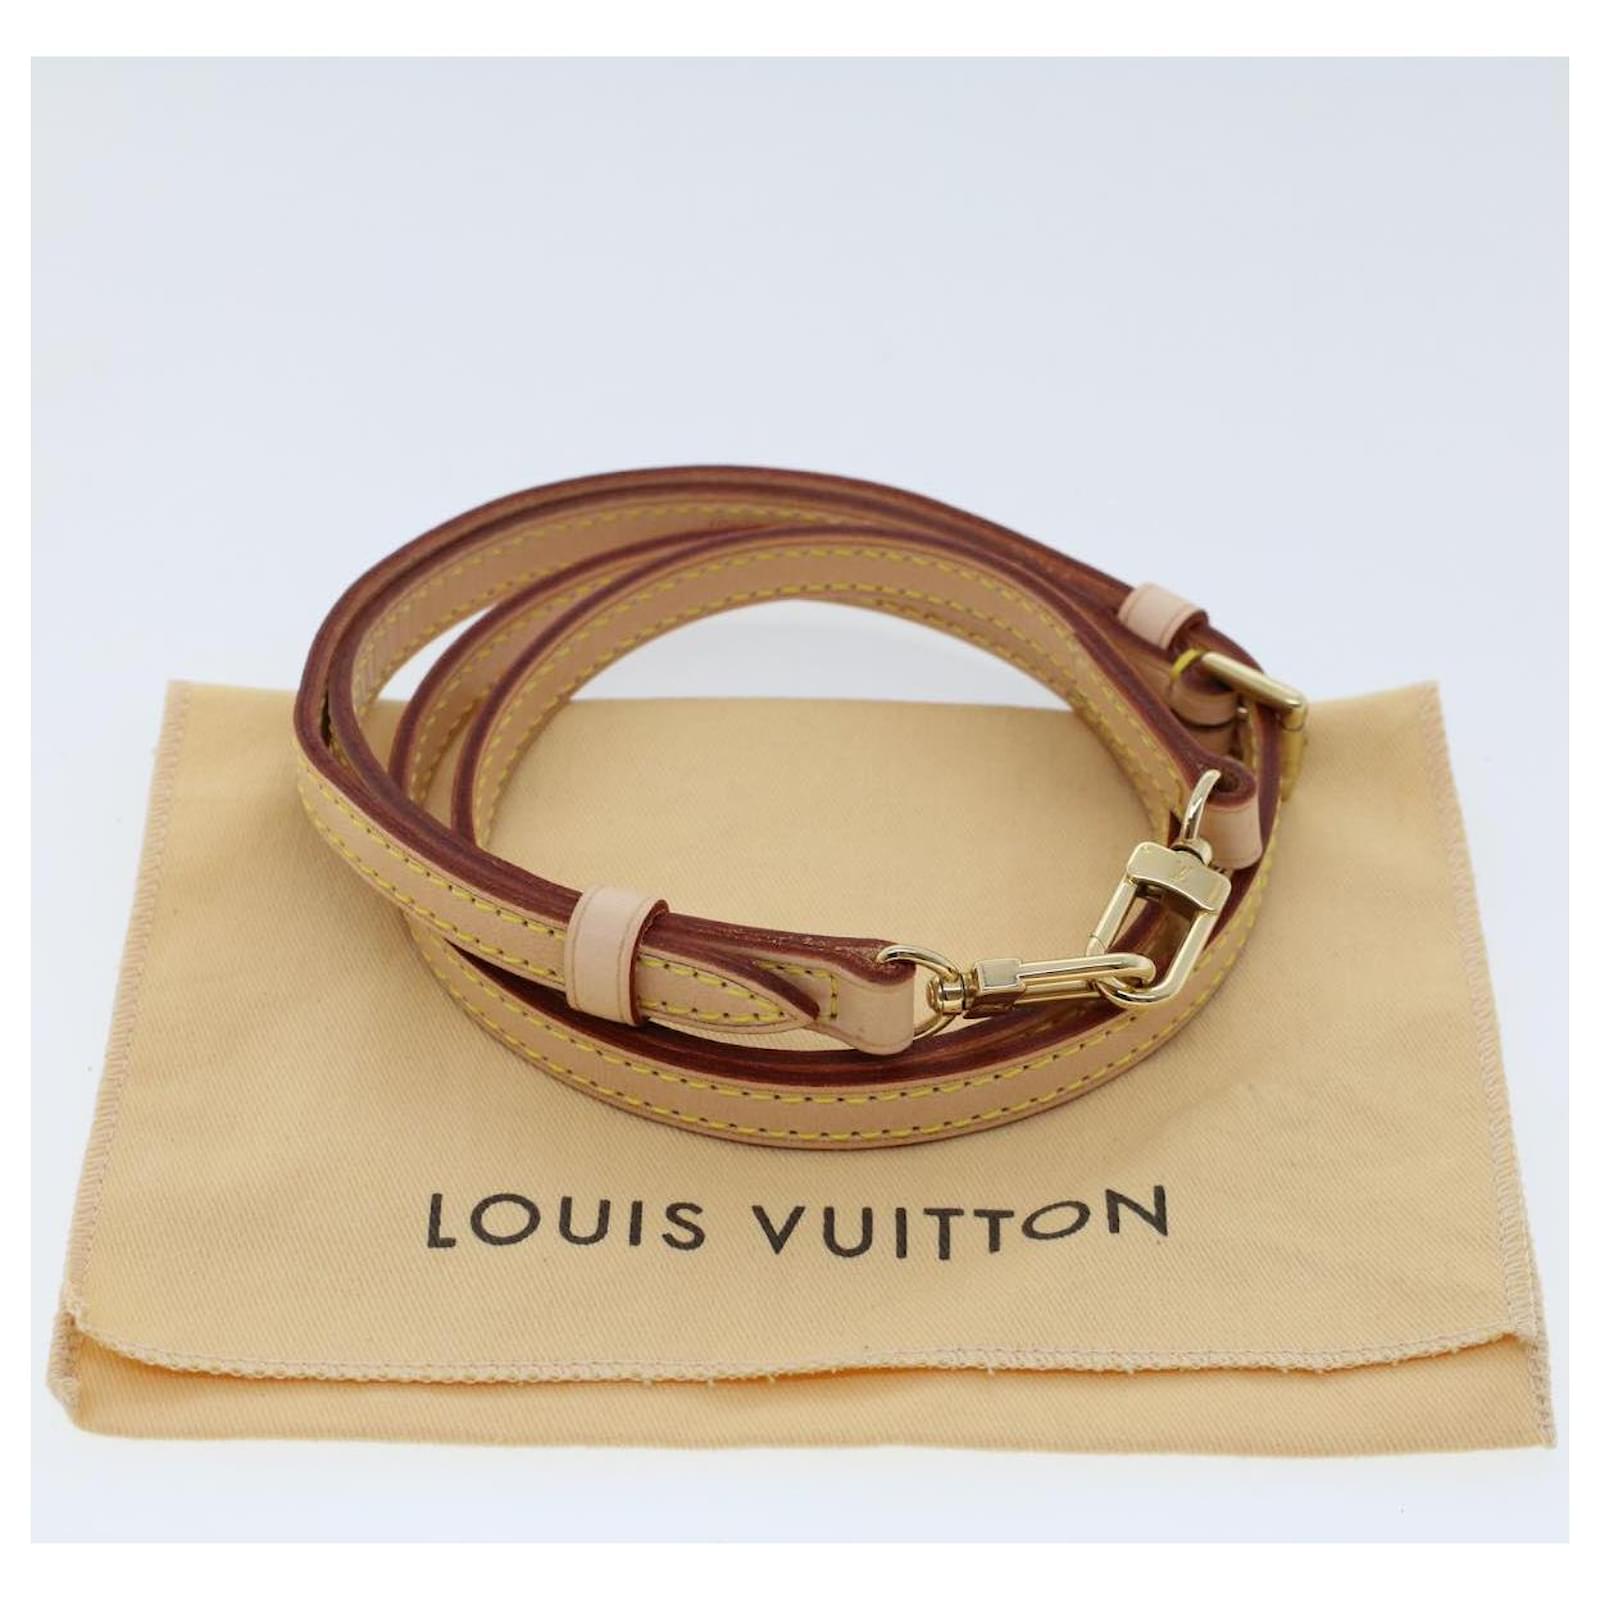 Correias de relógio de couro personalizadas adequadas para Louis Vuitton